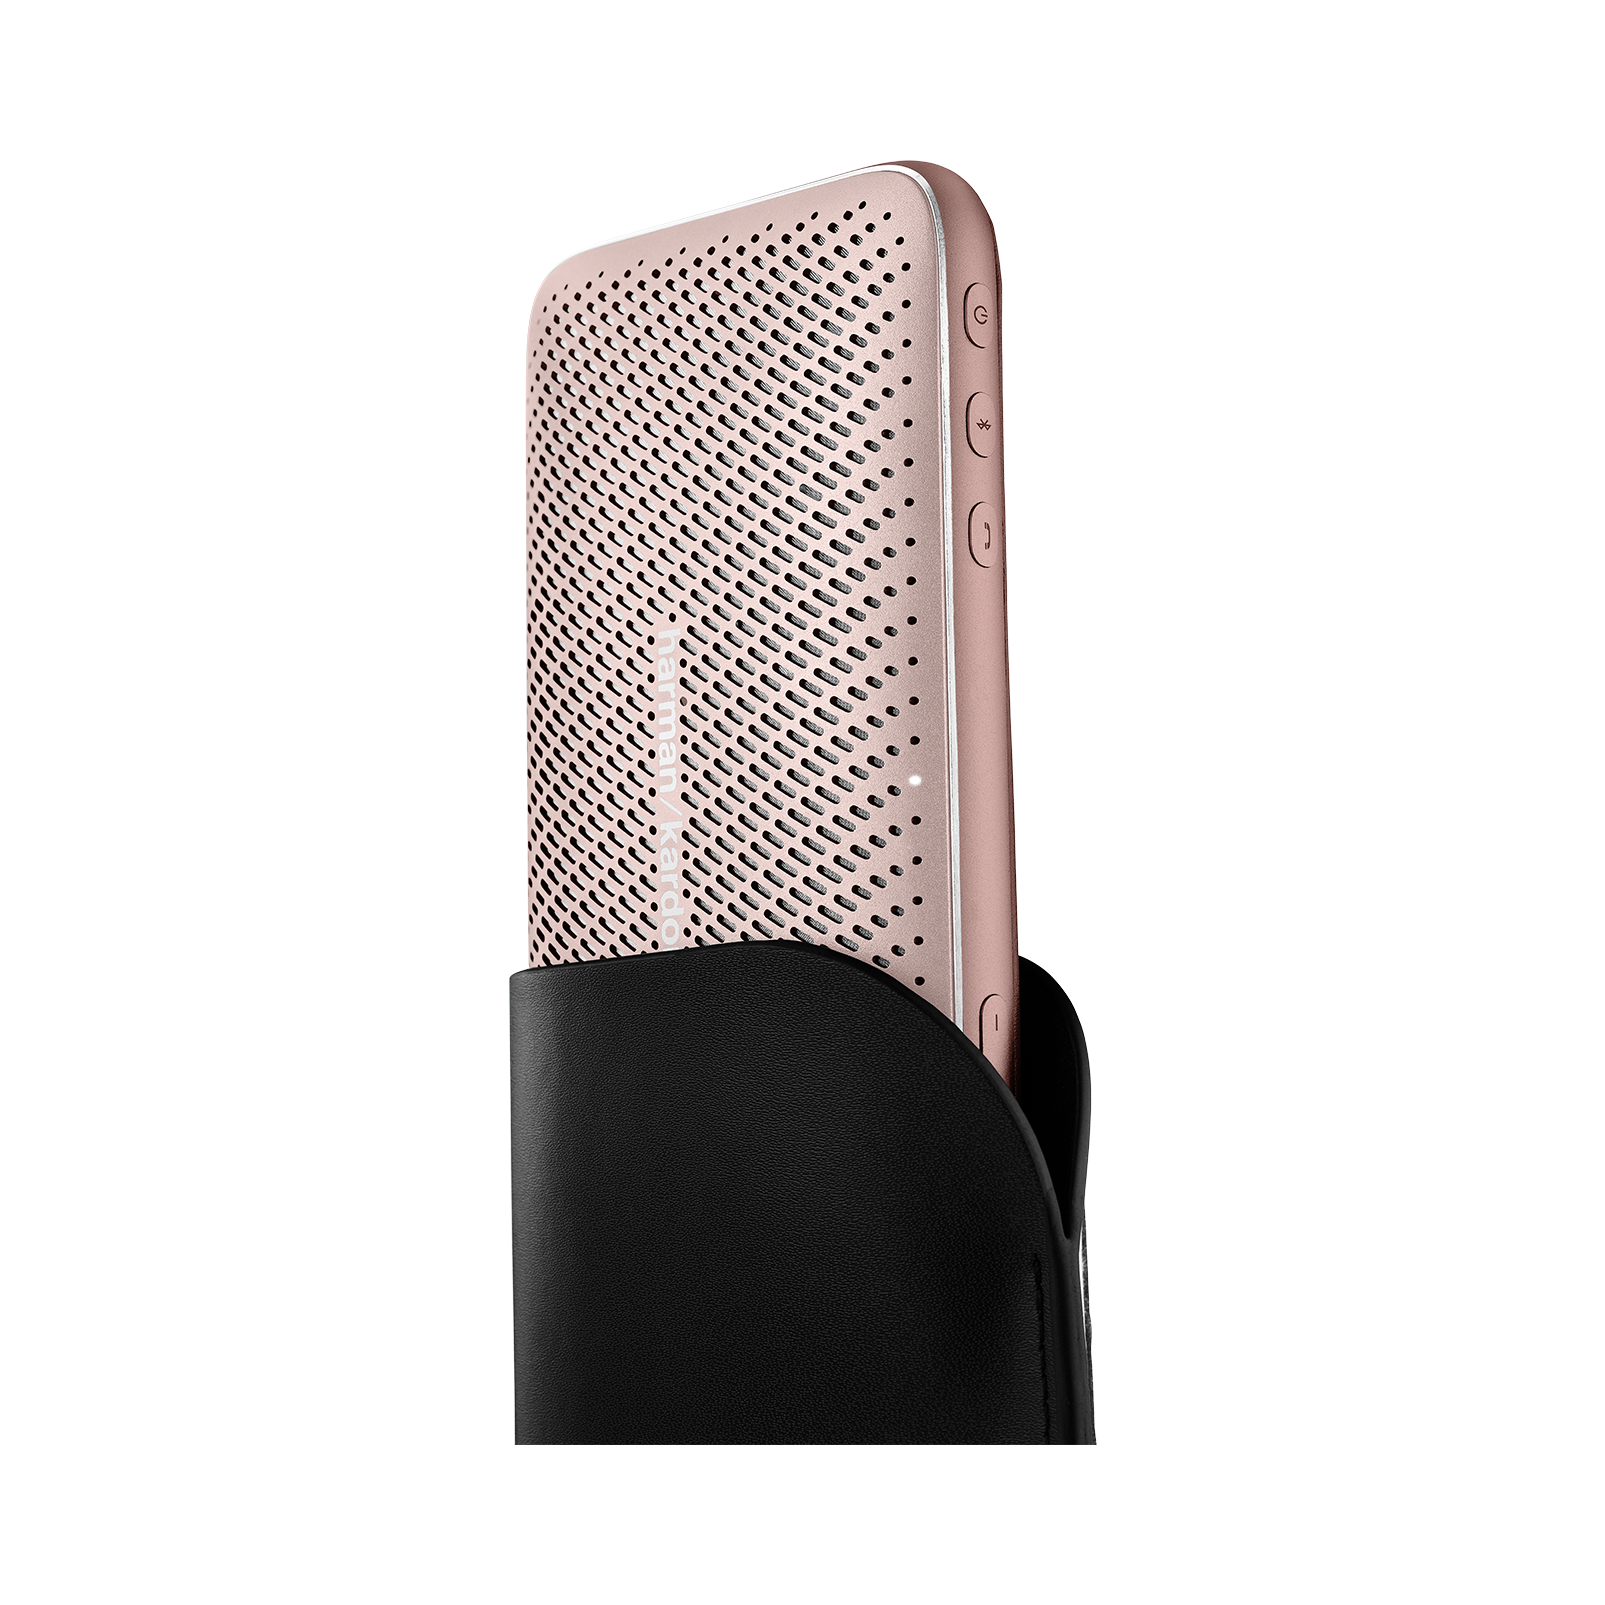 Harman Kardon Esquire Mini 2 - Gold - Ultra-slim and portable premium Bluetooth Speaker - Detailshot 1